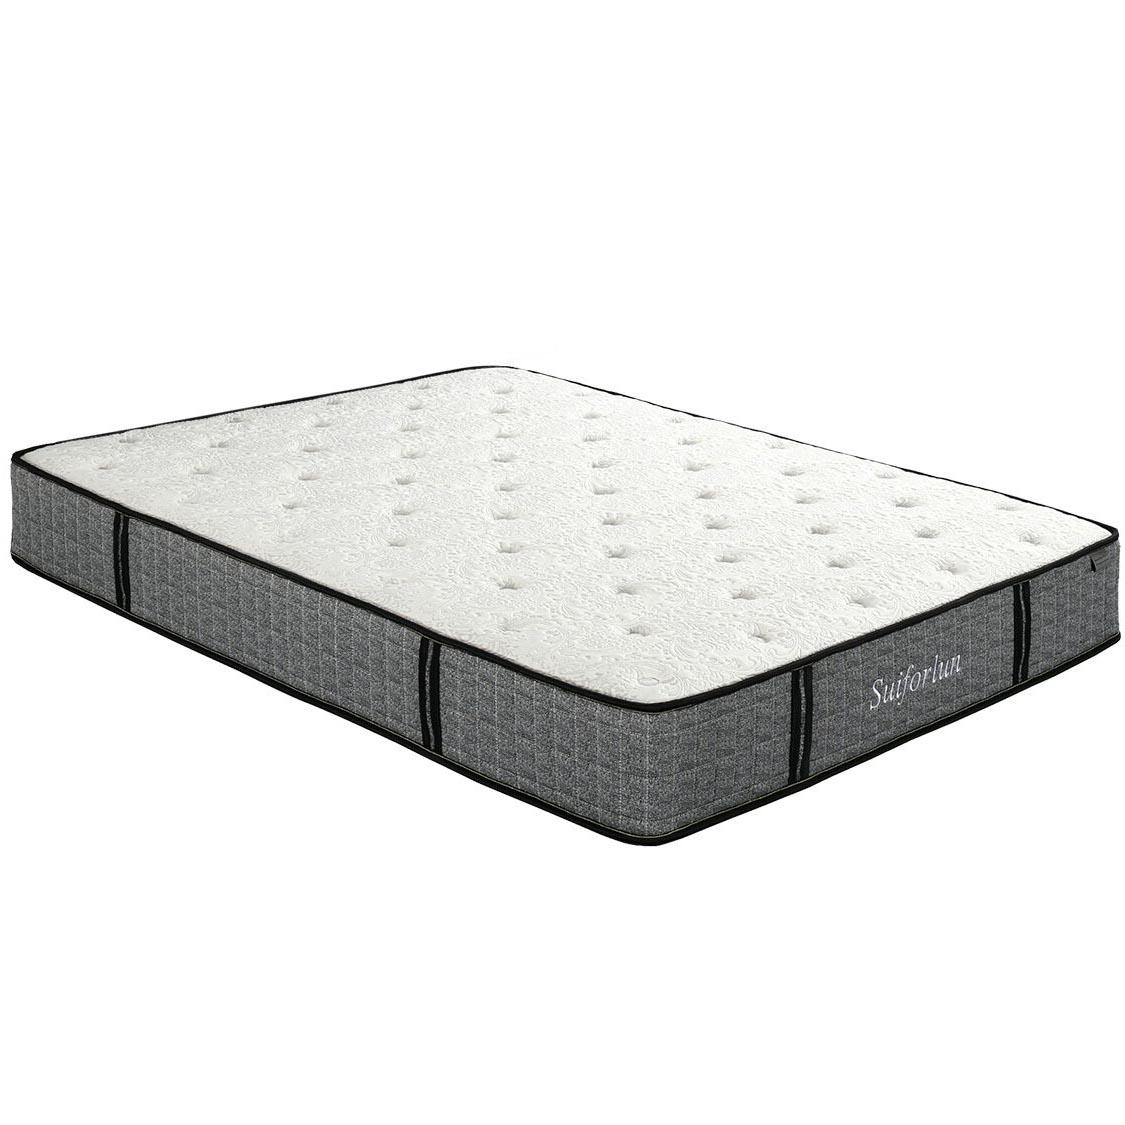 Suiforlun mattress stable latex hybrid mattress series for hotel-2